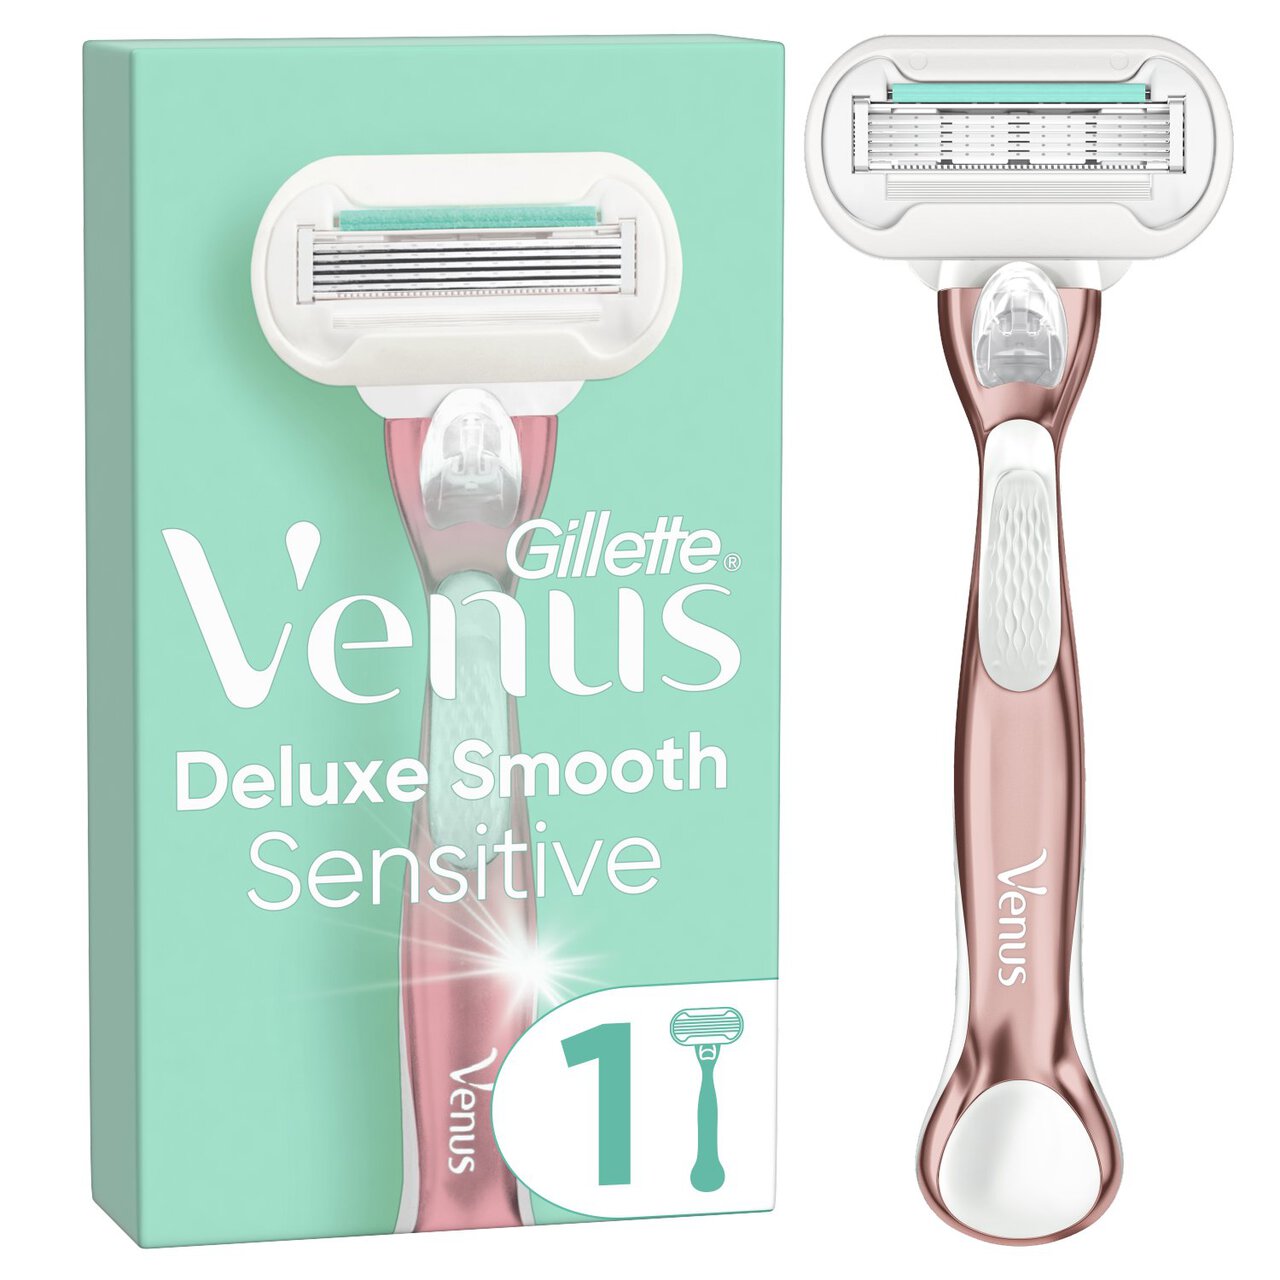 Gillette Venus Deluxe Smooth Sensitive Razor Rose Gold